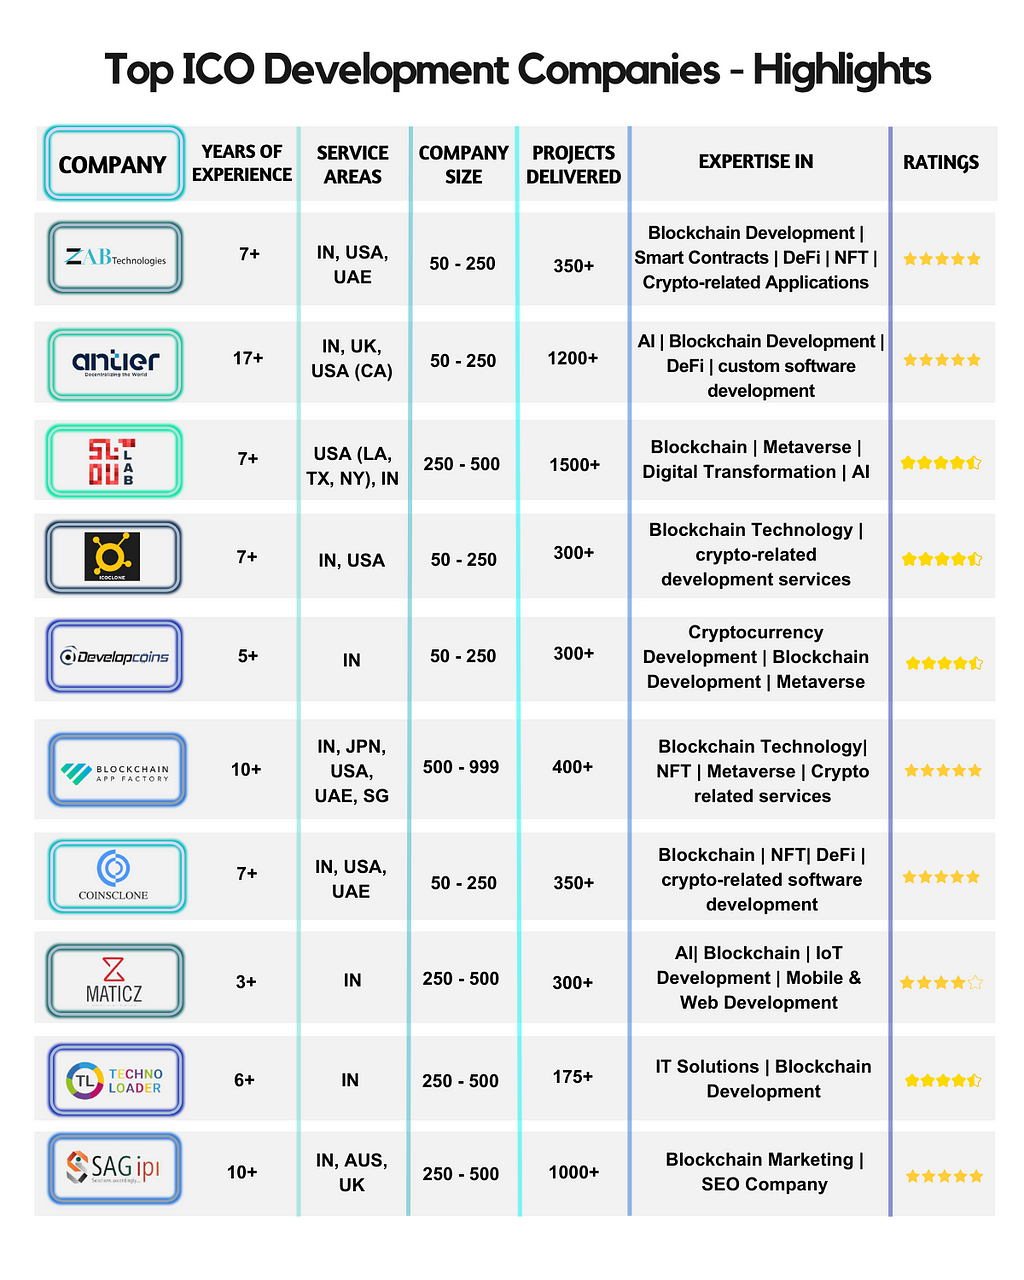 Highlights of Top ICO Development Companies